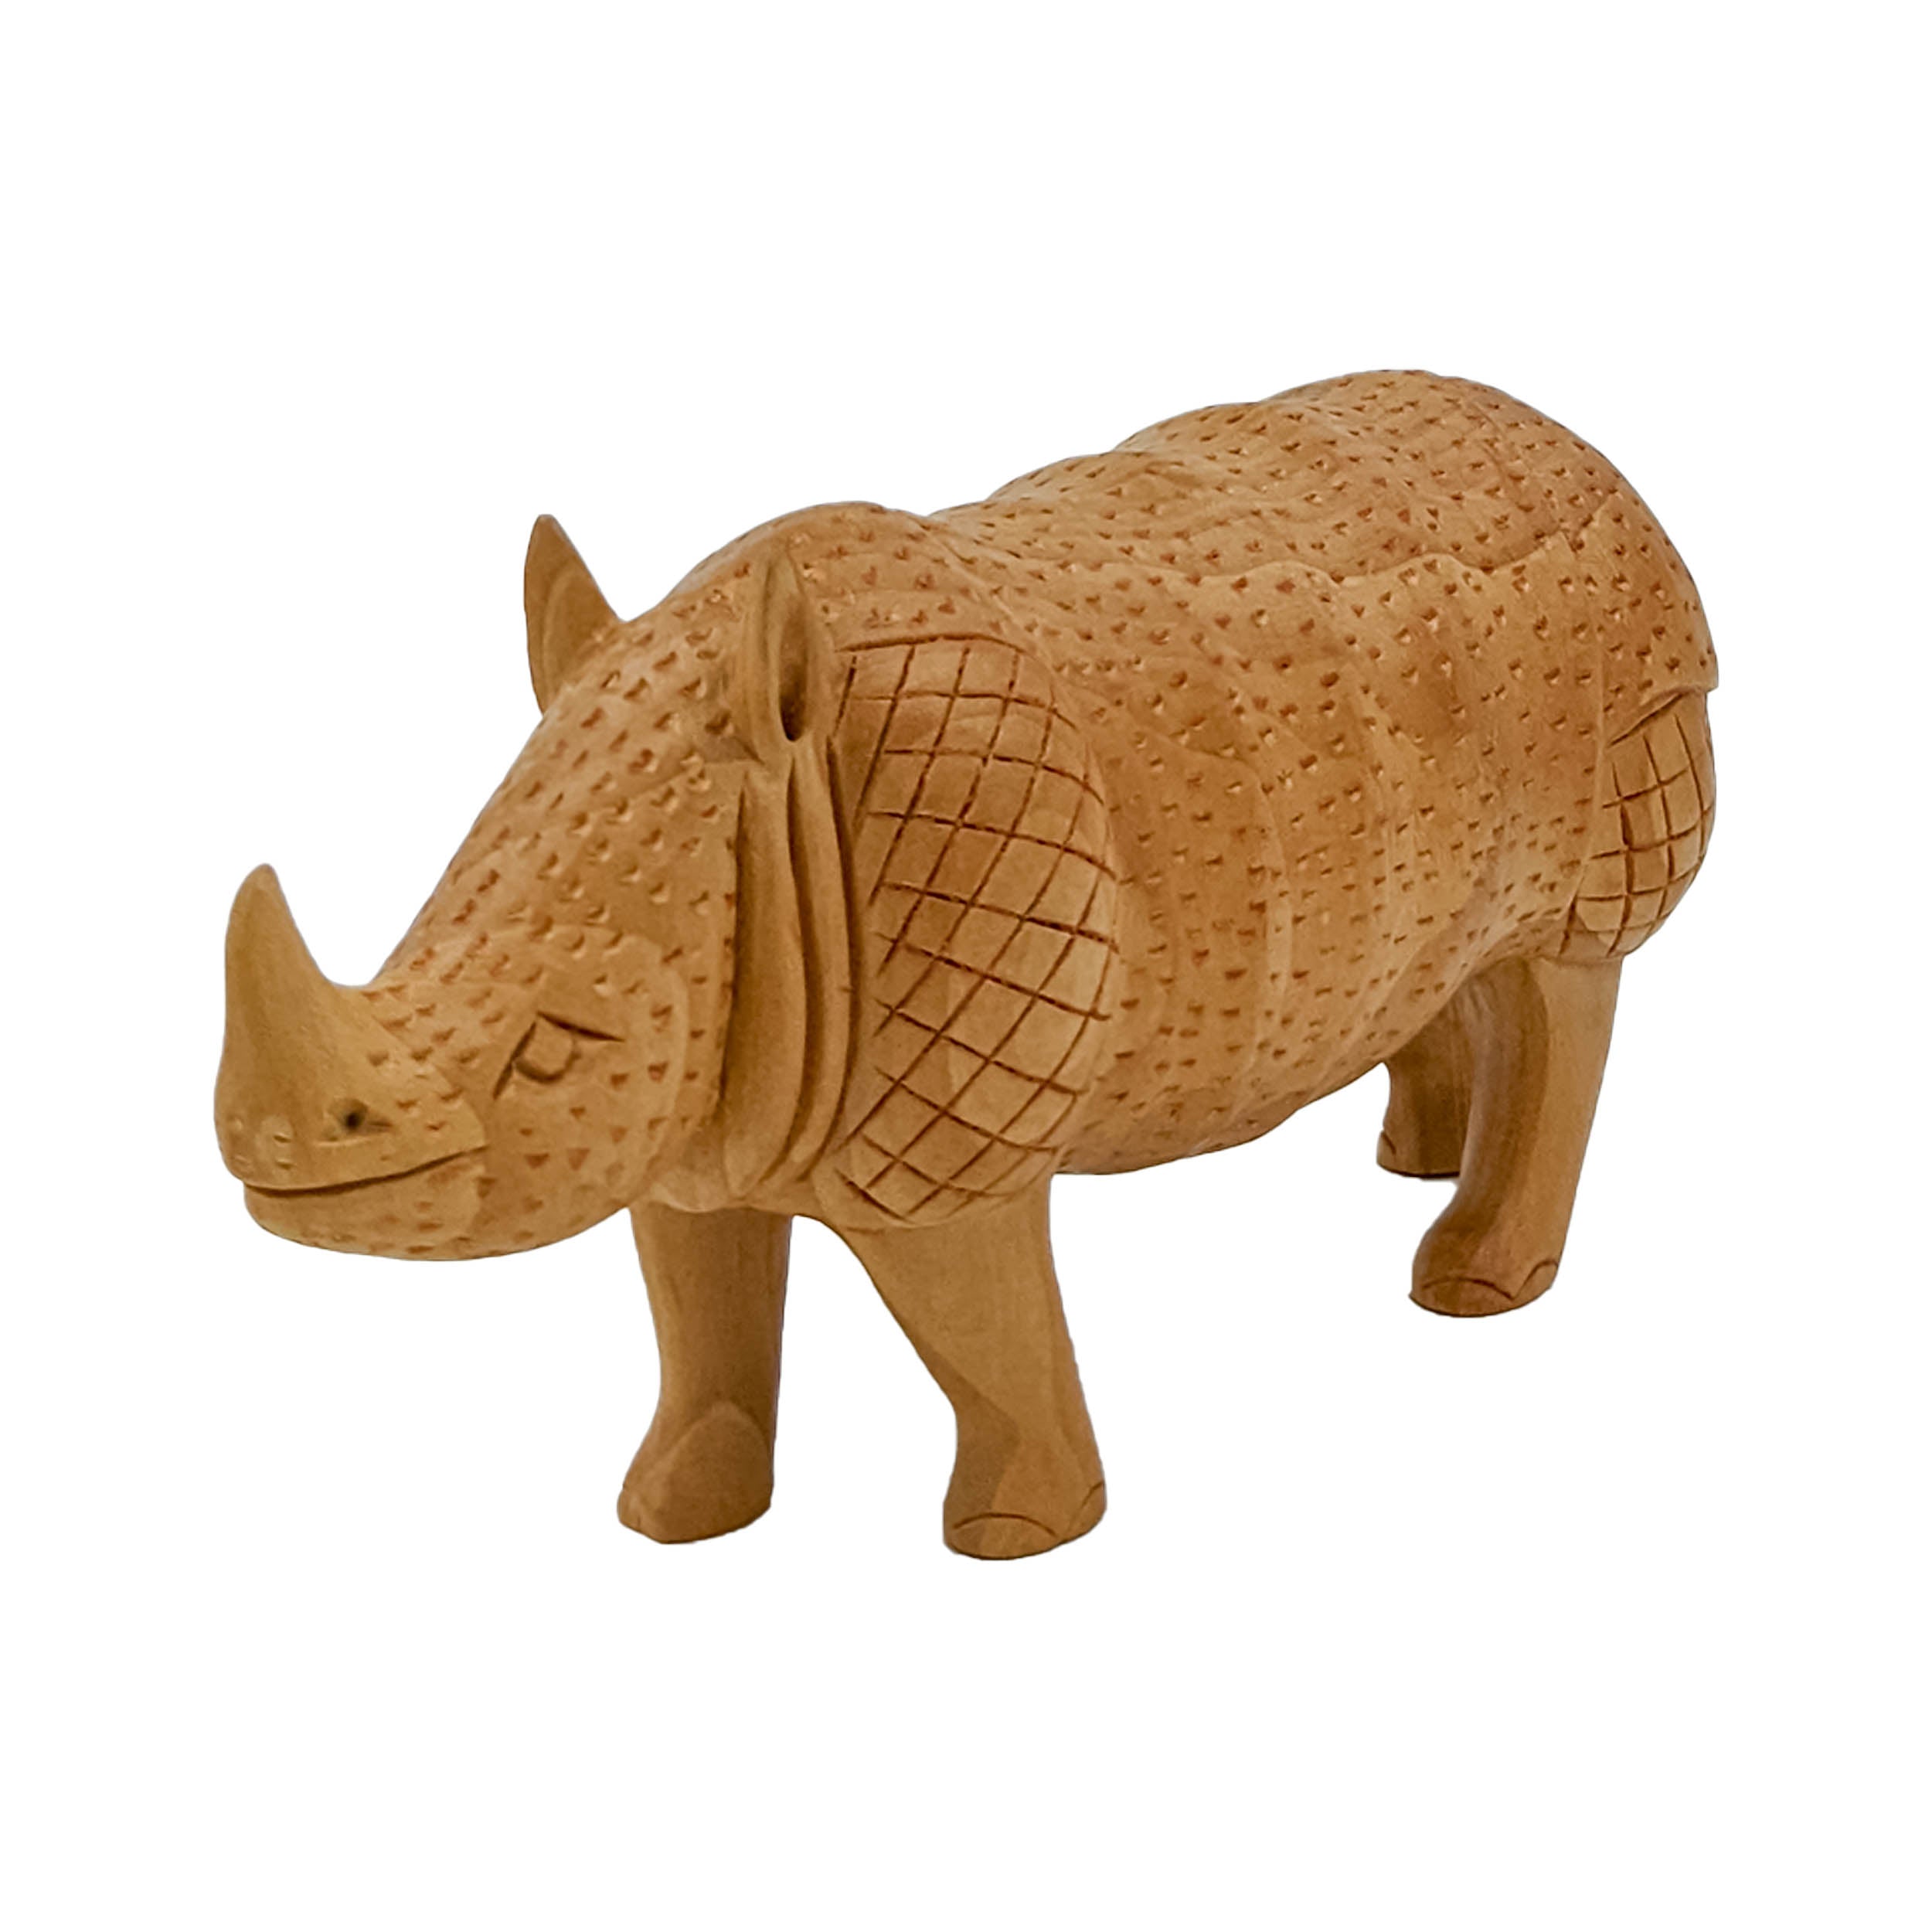 Handmade Wooden Rhinoceros With Carving Handicraft - Unique Home Decor Piece